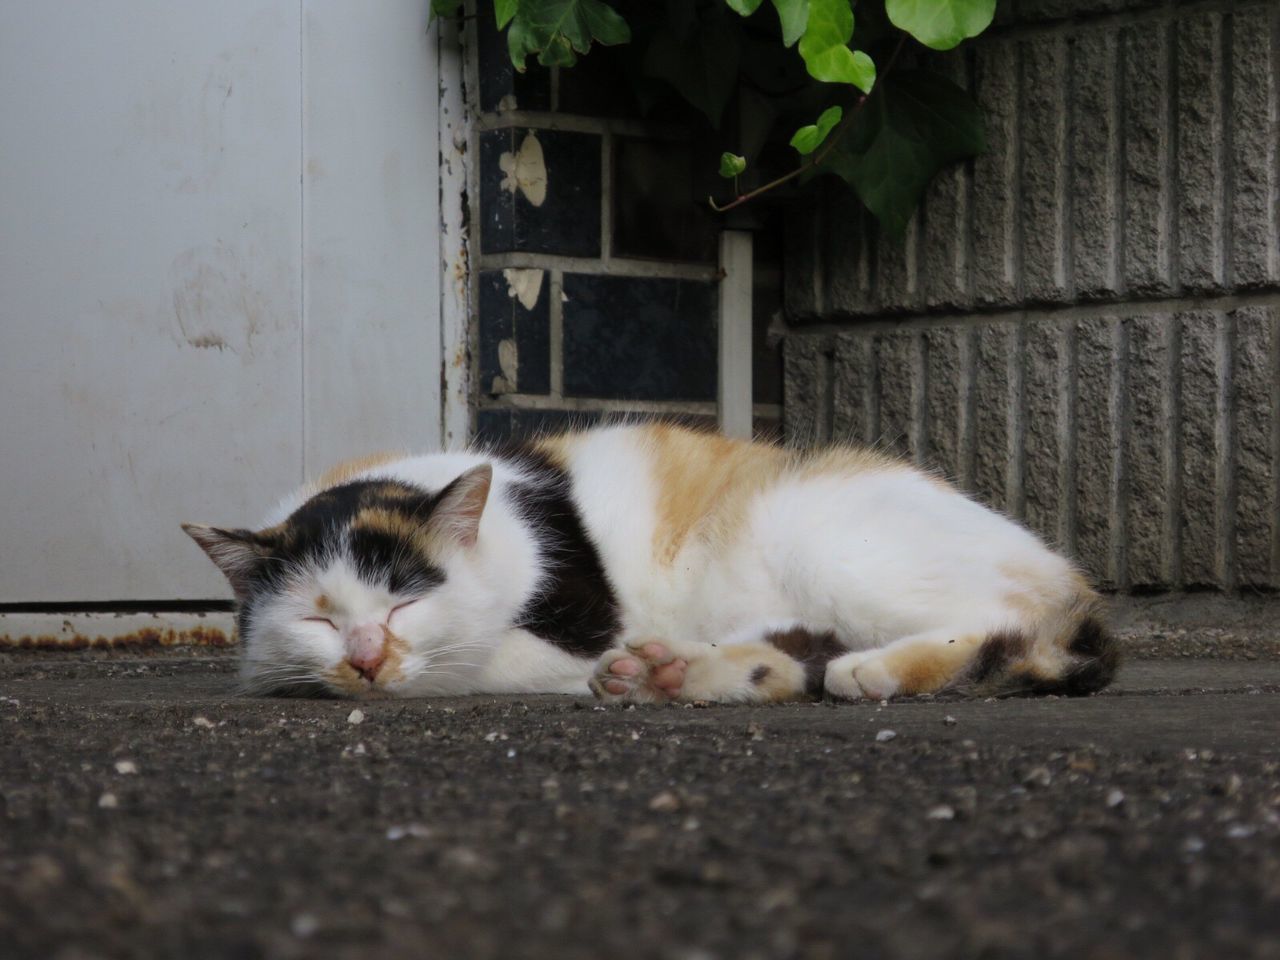 Cat sleeping outdoors